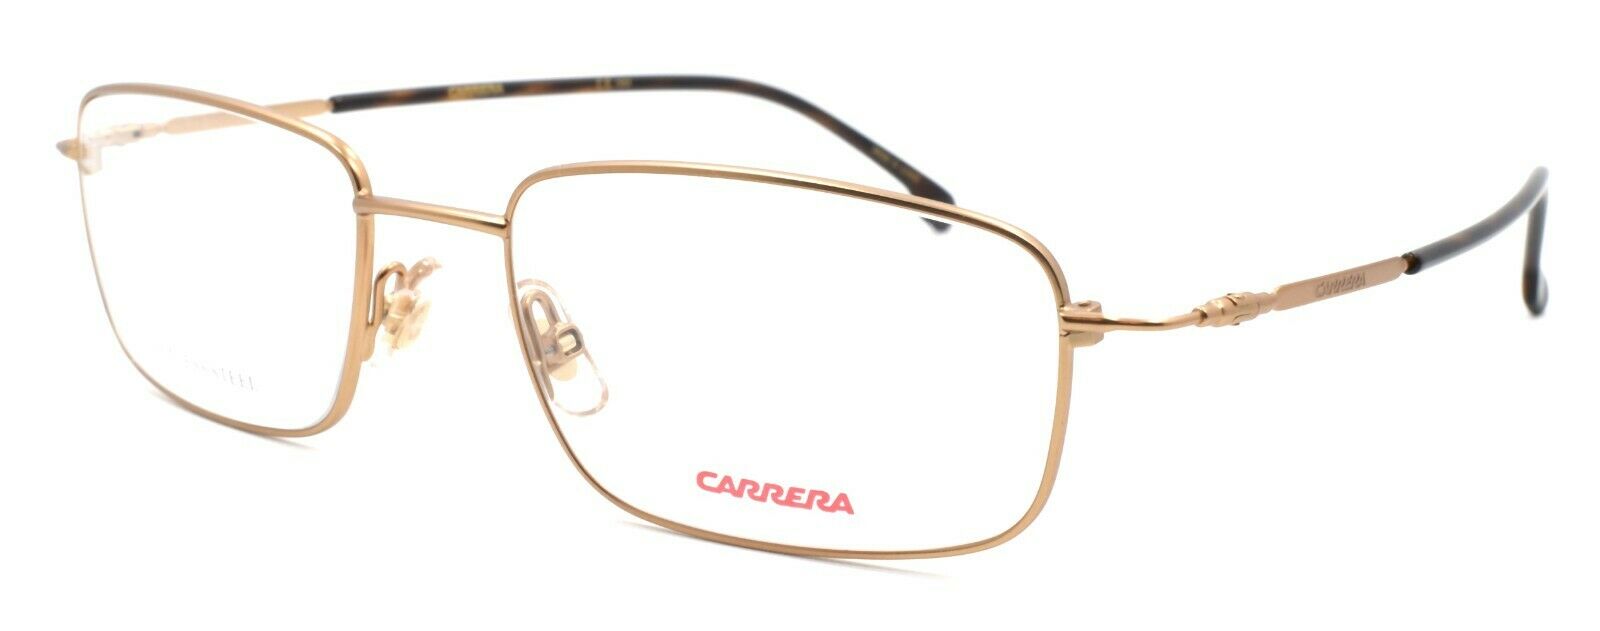 1-Carrera 146/V AOZ Men's Eyeglasses Frames 53-18-140 Semi-Matte Gold + CASE-762753066244-IKSpecs